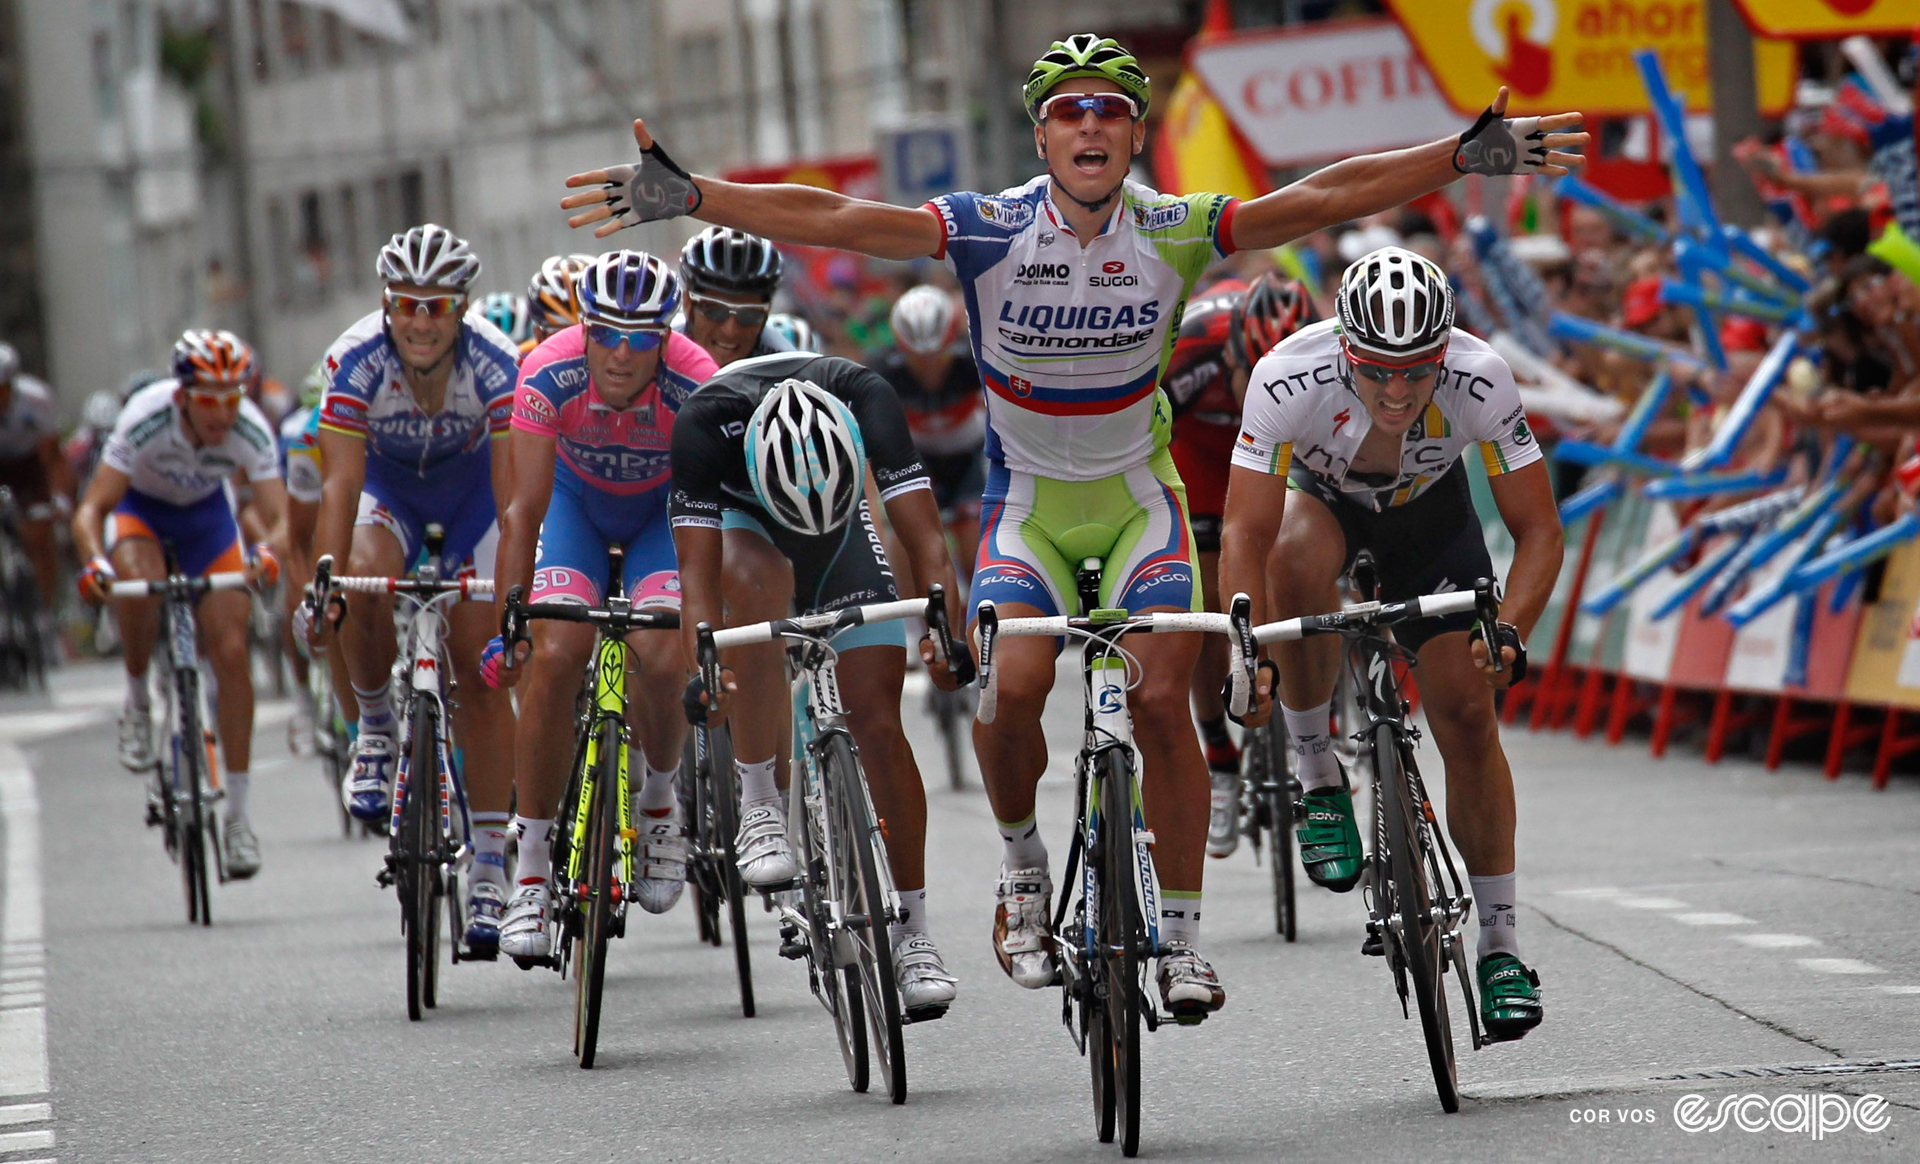 Peter Sagan celebrates winning a stage at the 2011 Vuelta a España.